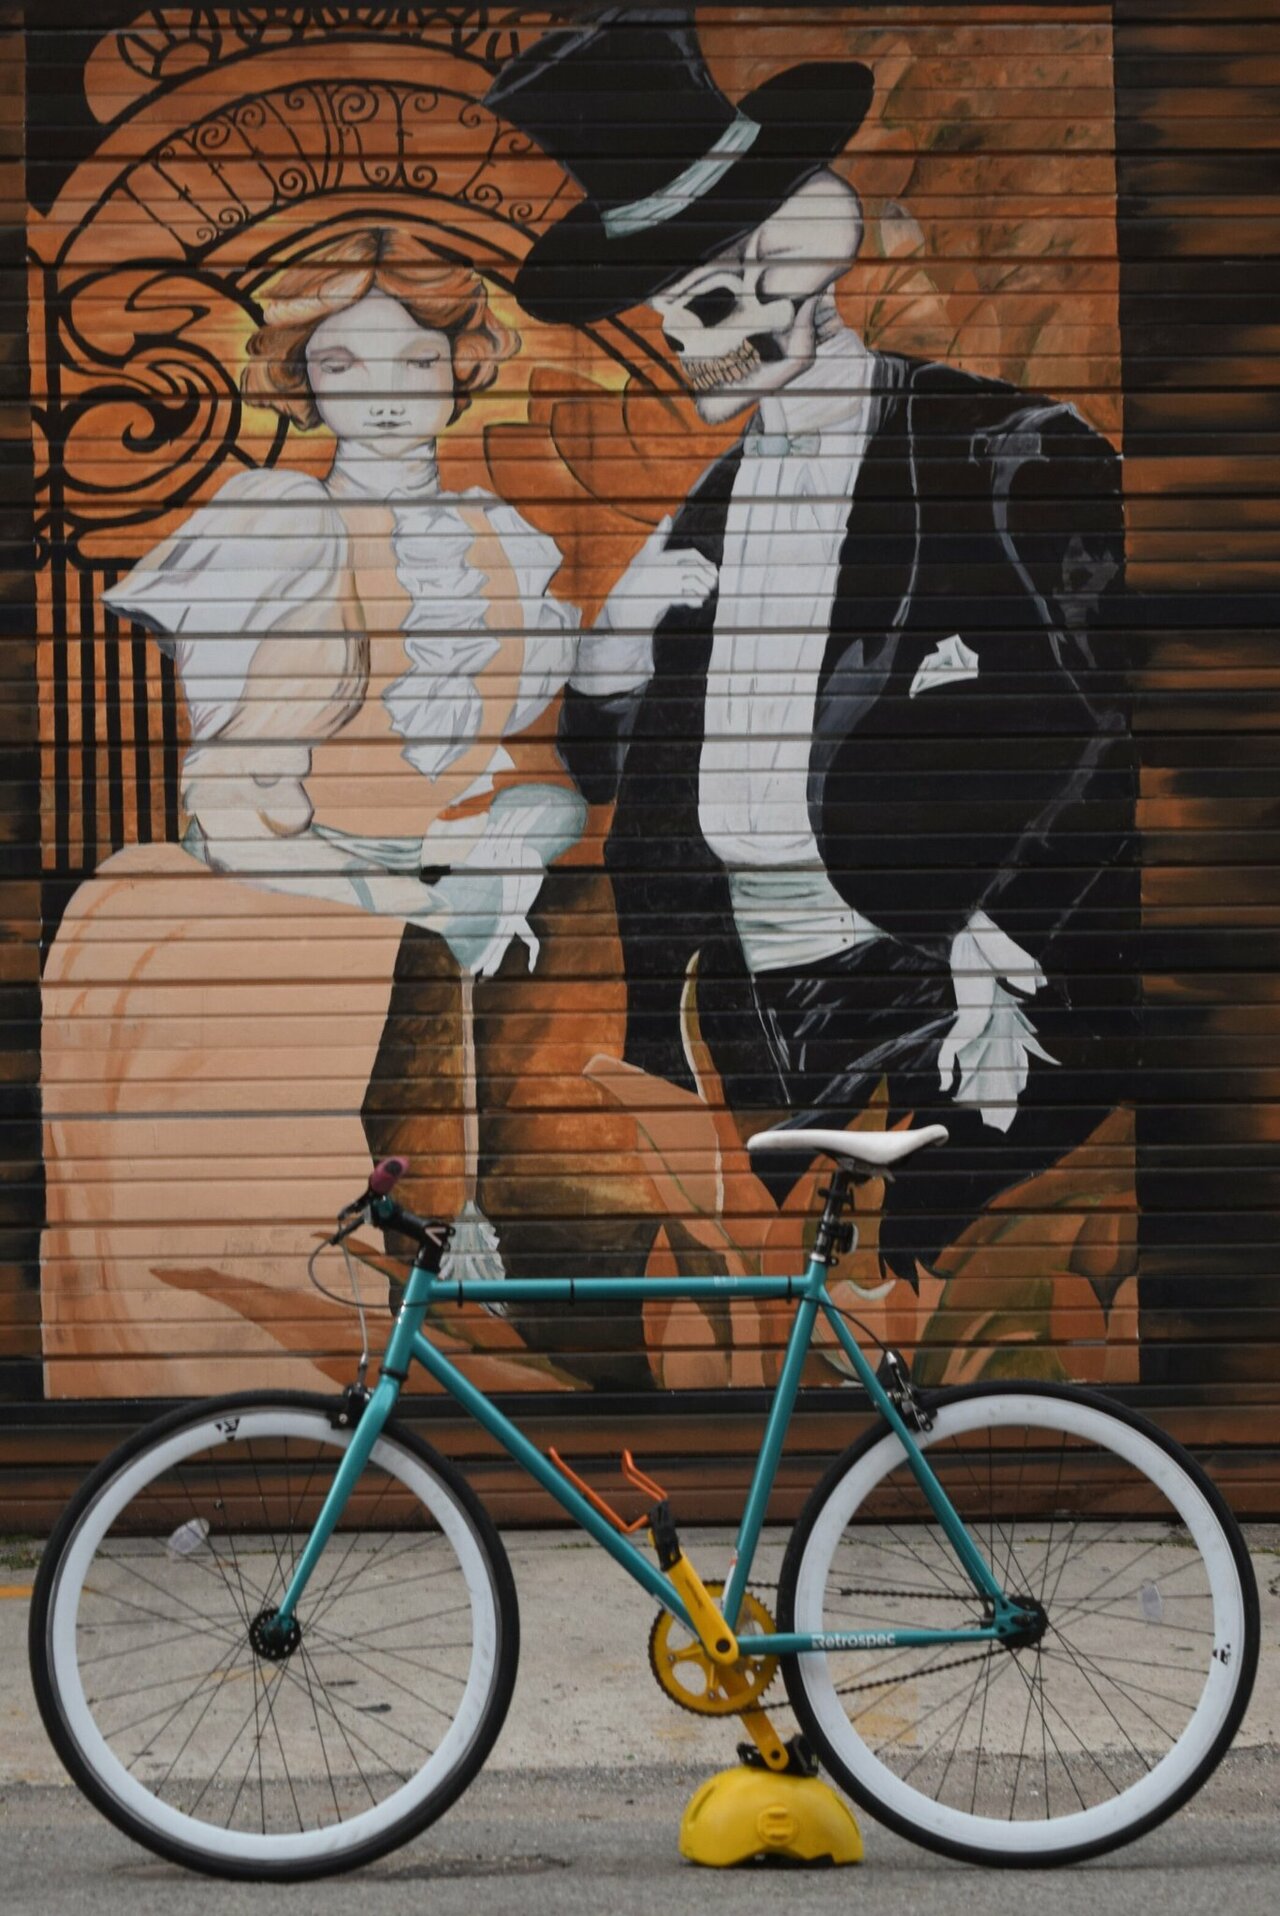 My#retrospec #bicycle  New Orleans❤#streetart.Photo by @picturenola..Media @bananasocialmedia#travel #nola https://t.co/mgpQ8QPw7Y